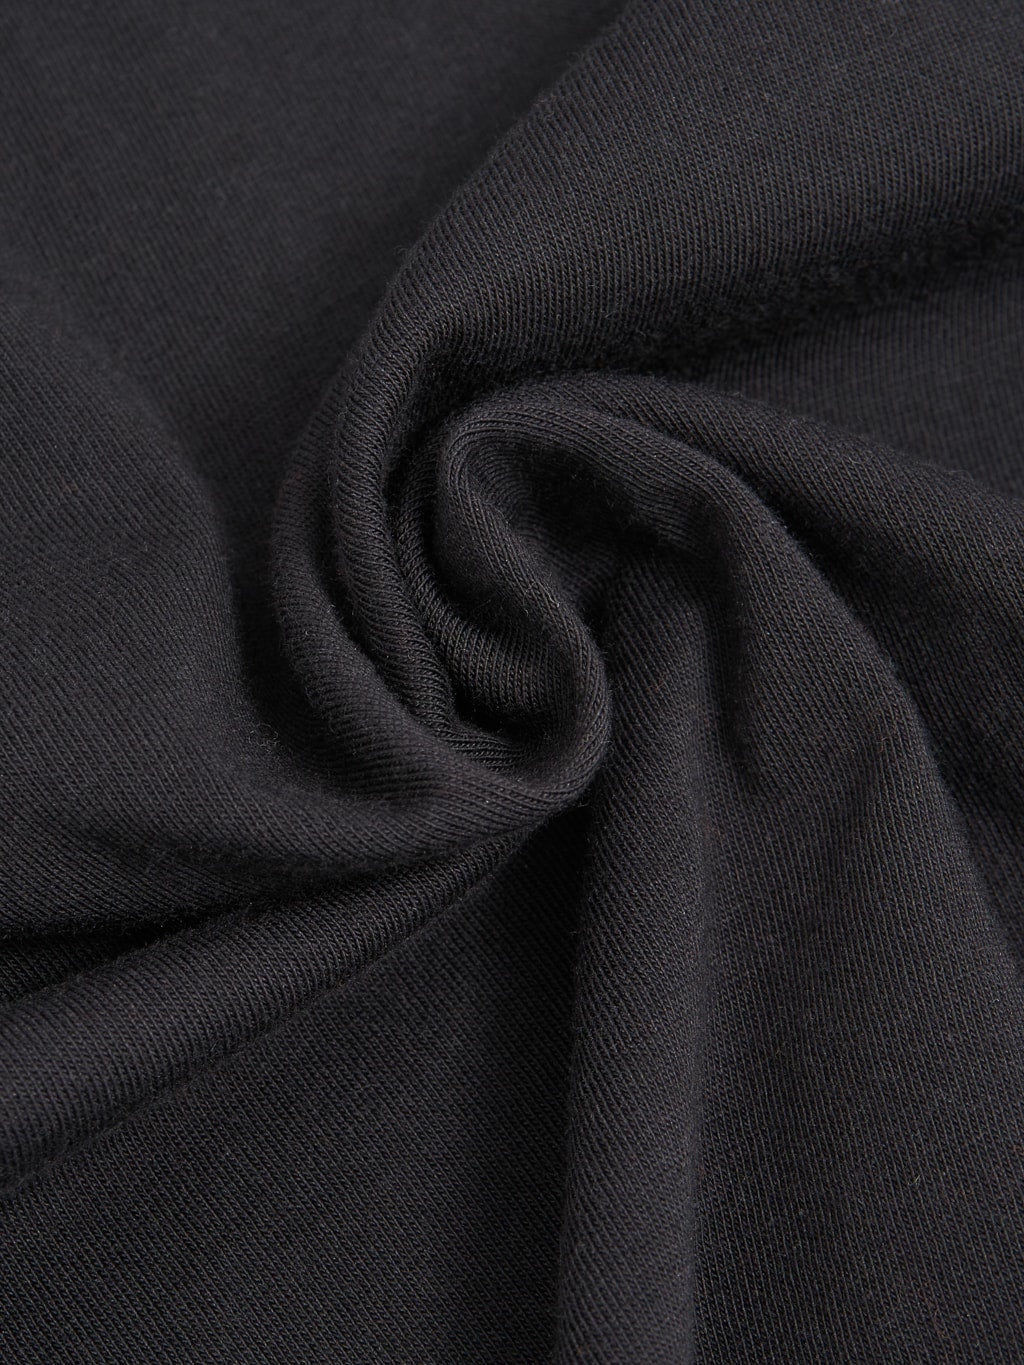 3sixteen pima cotton t-shirt pack cotton fabric texture